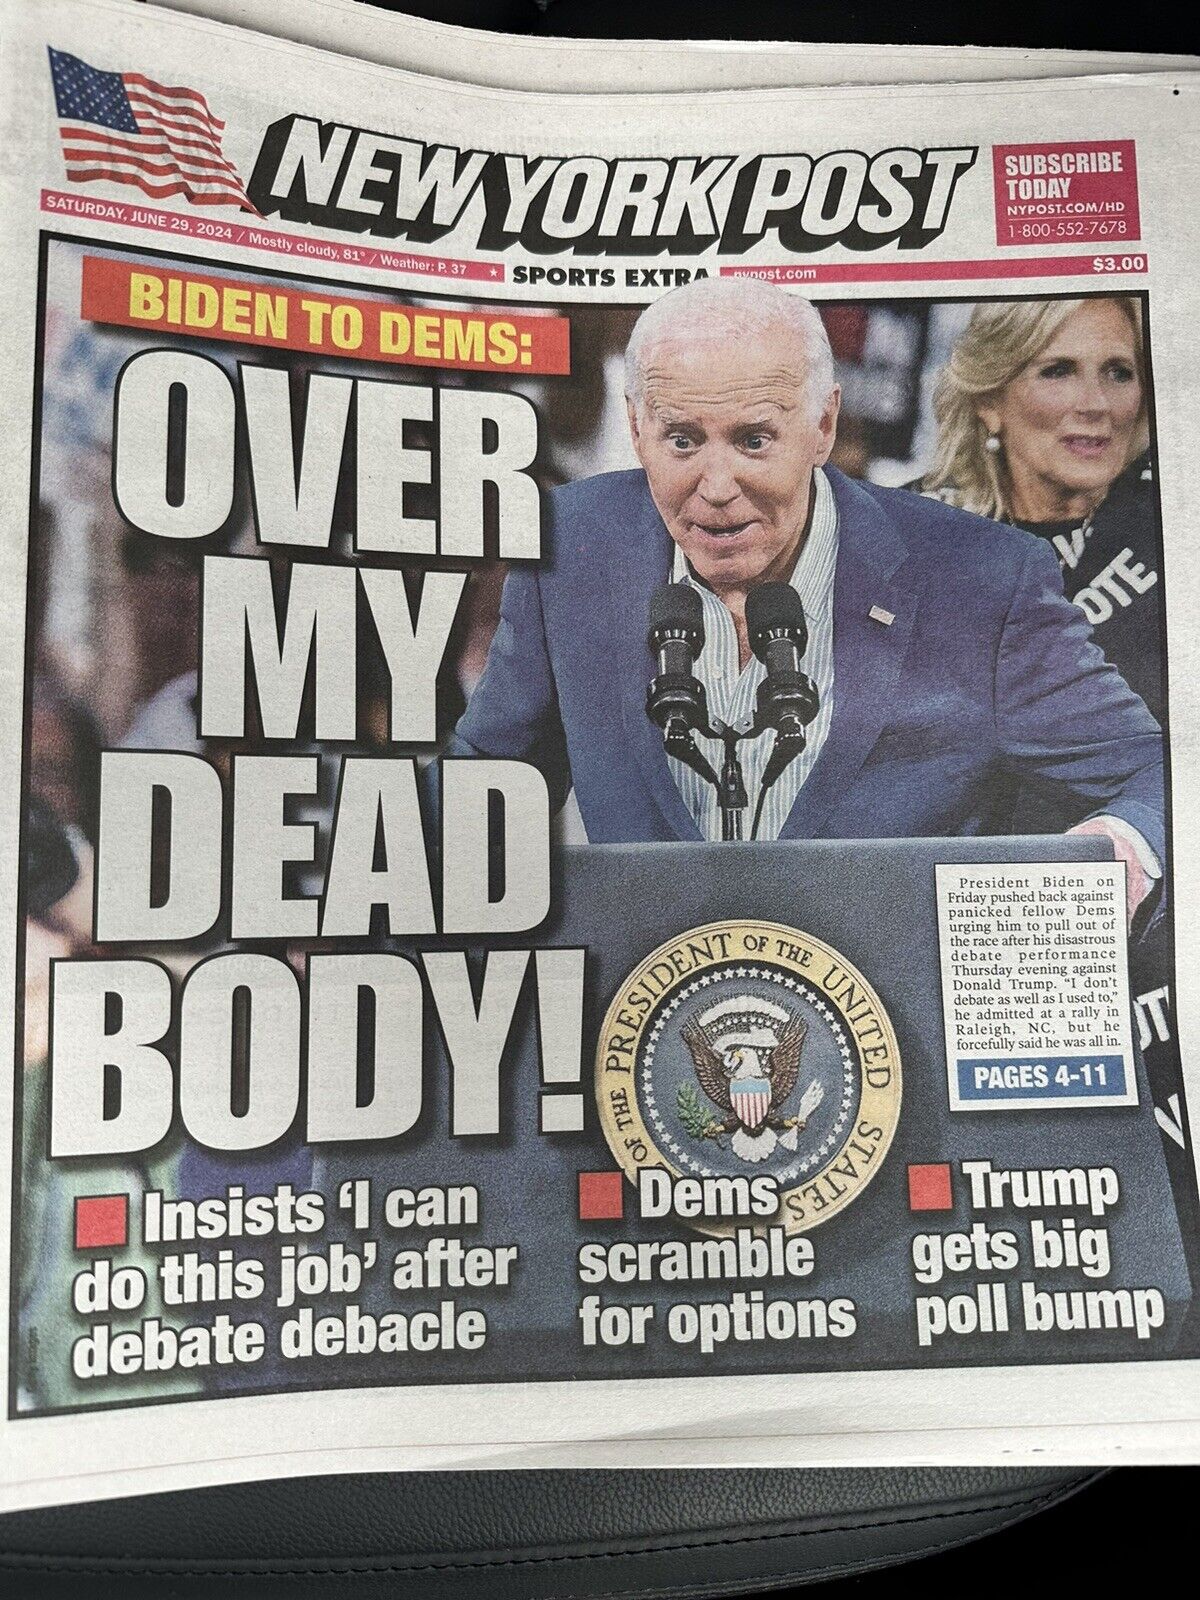 HISTORIC NEW YORK POST JUNE 29 2024 Joe Biden “Over My Dead” Body Donald Trump